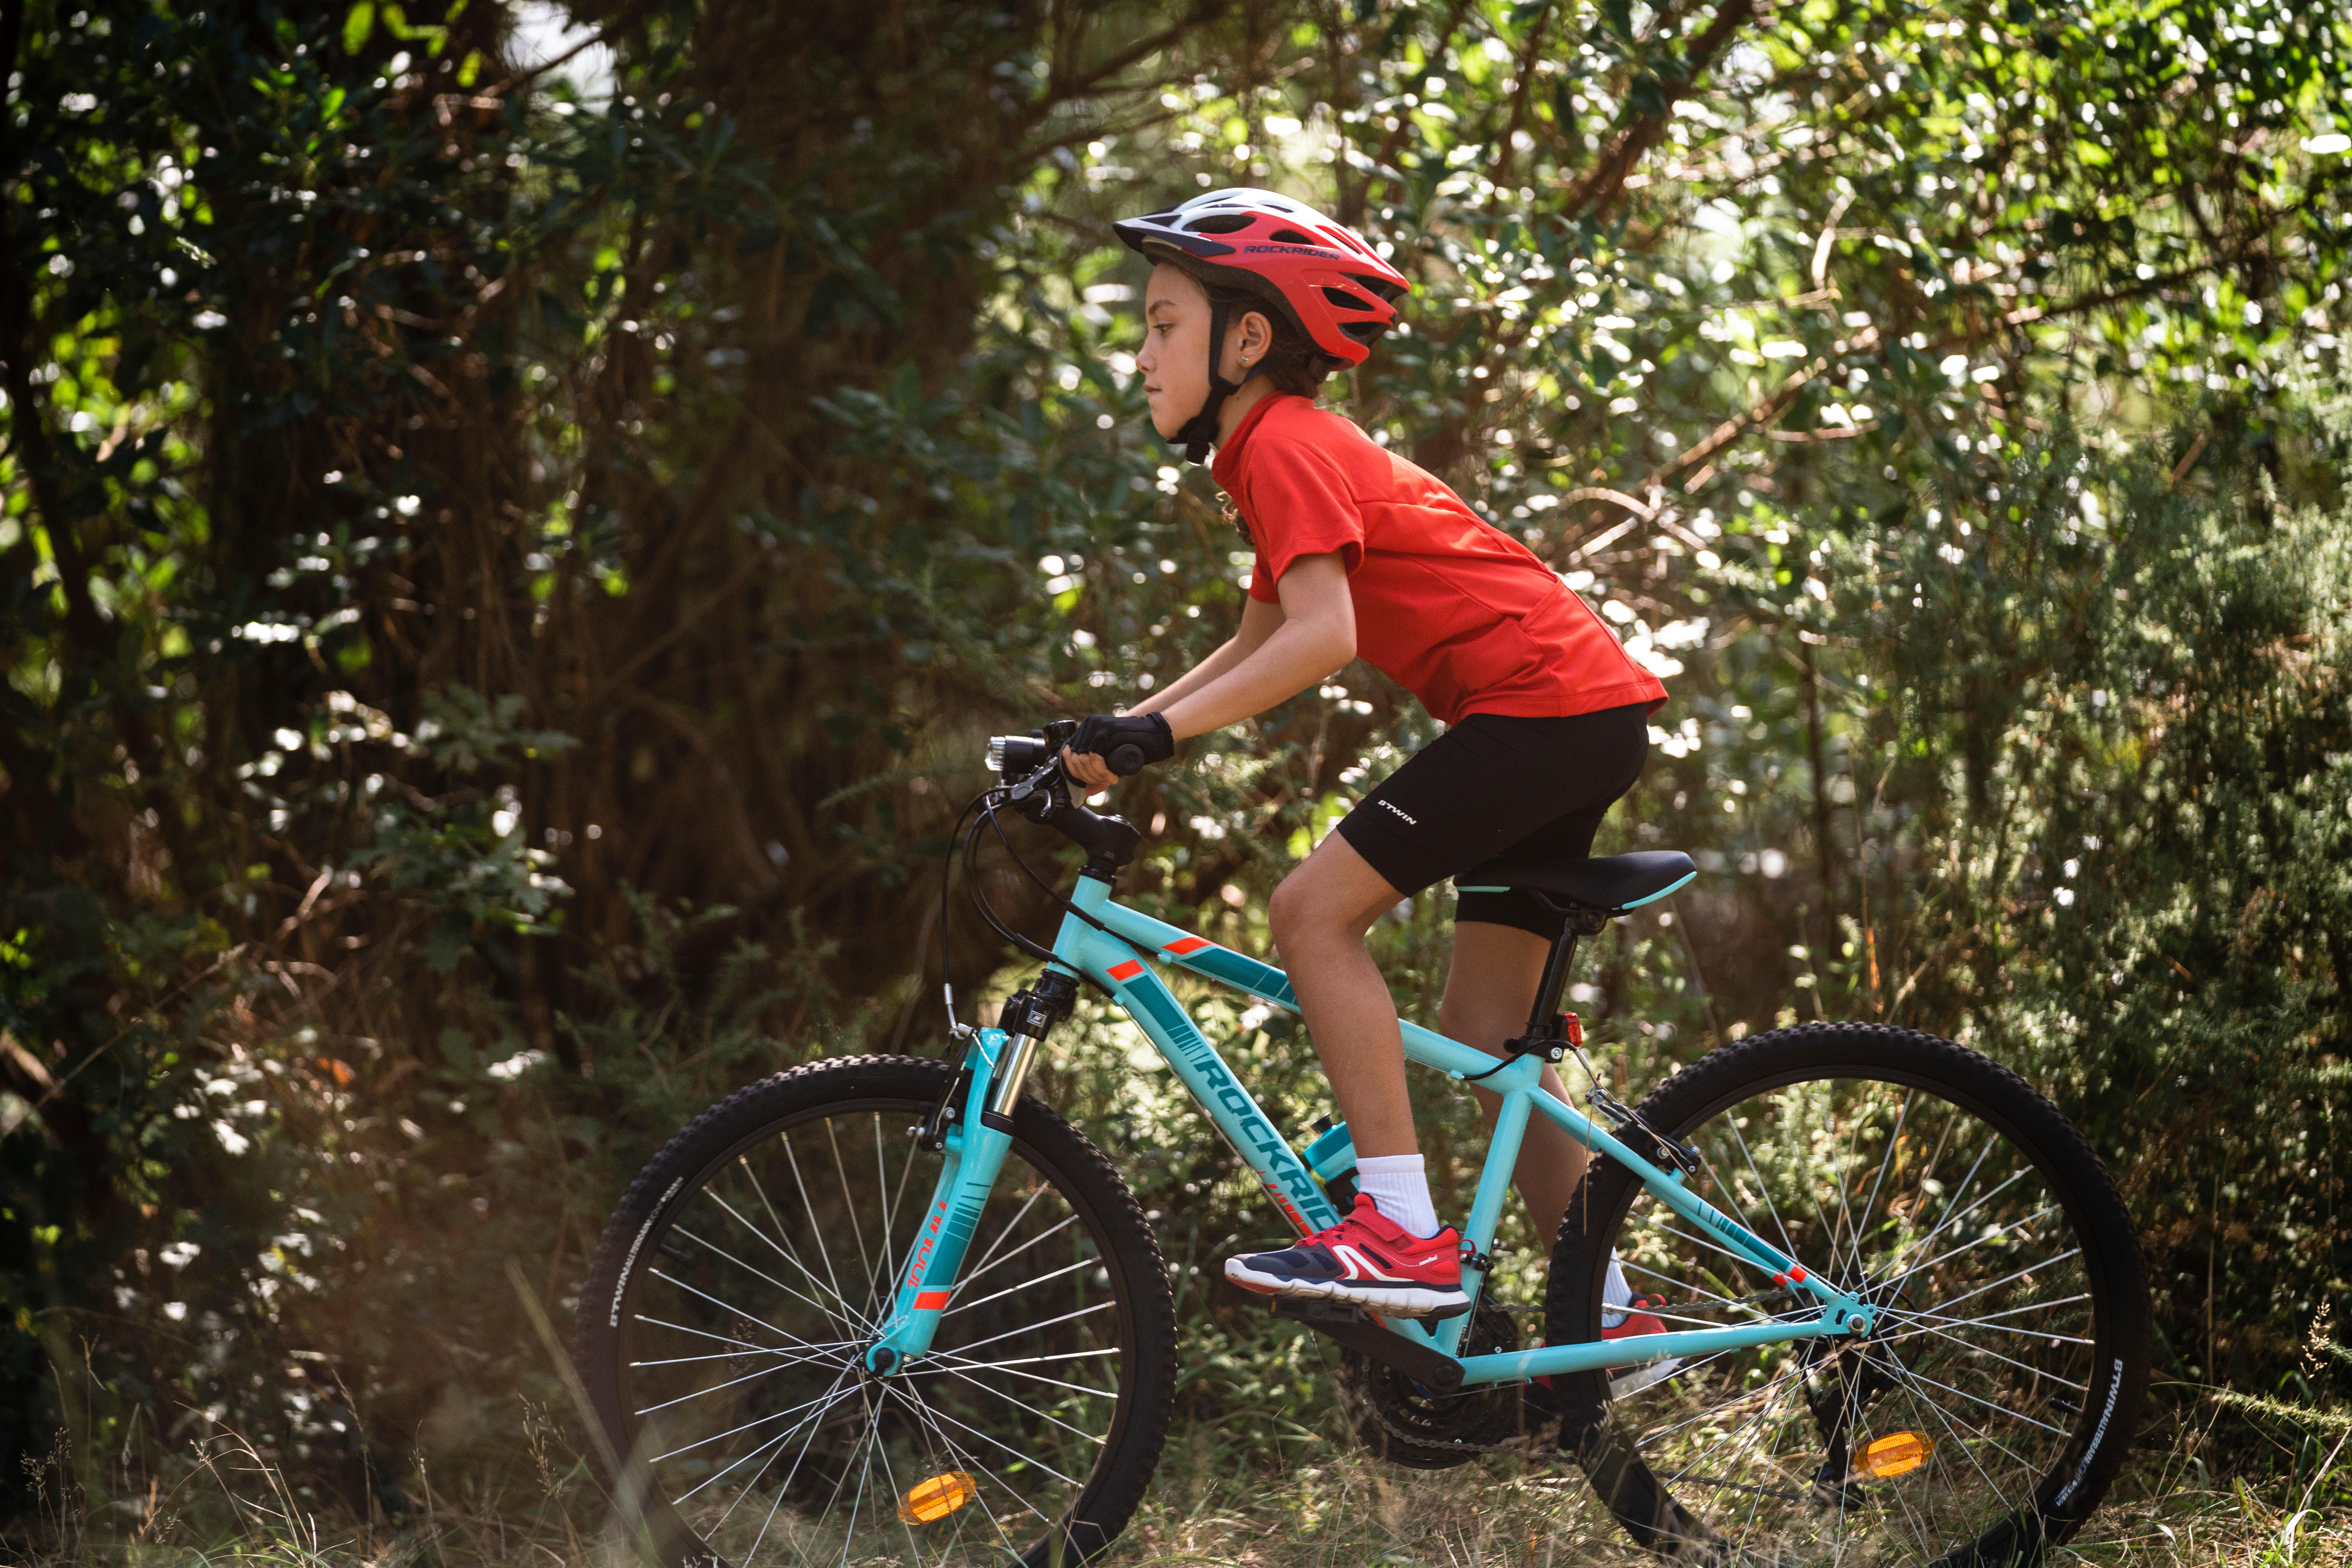 100 cycling shorts - Kids - BTWIN